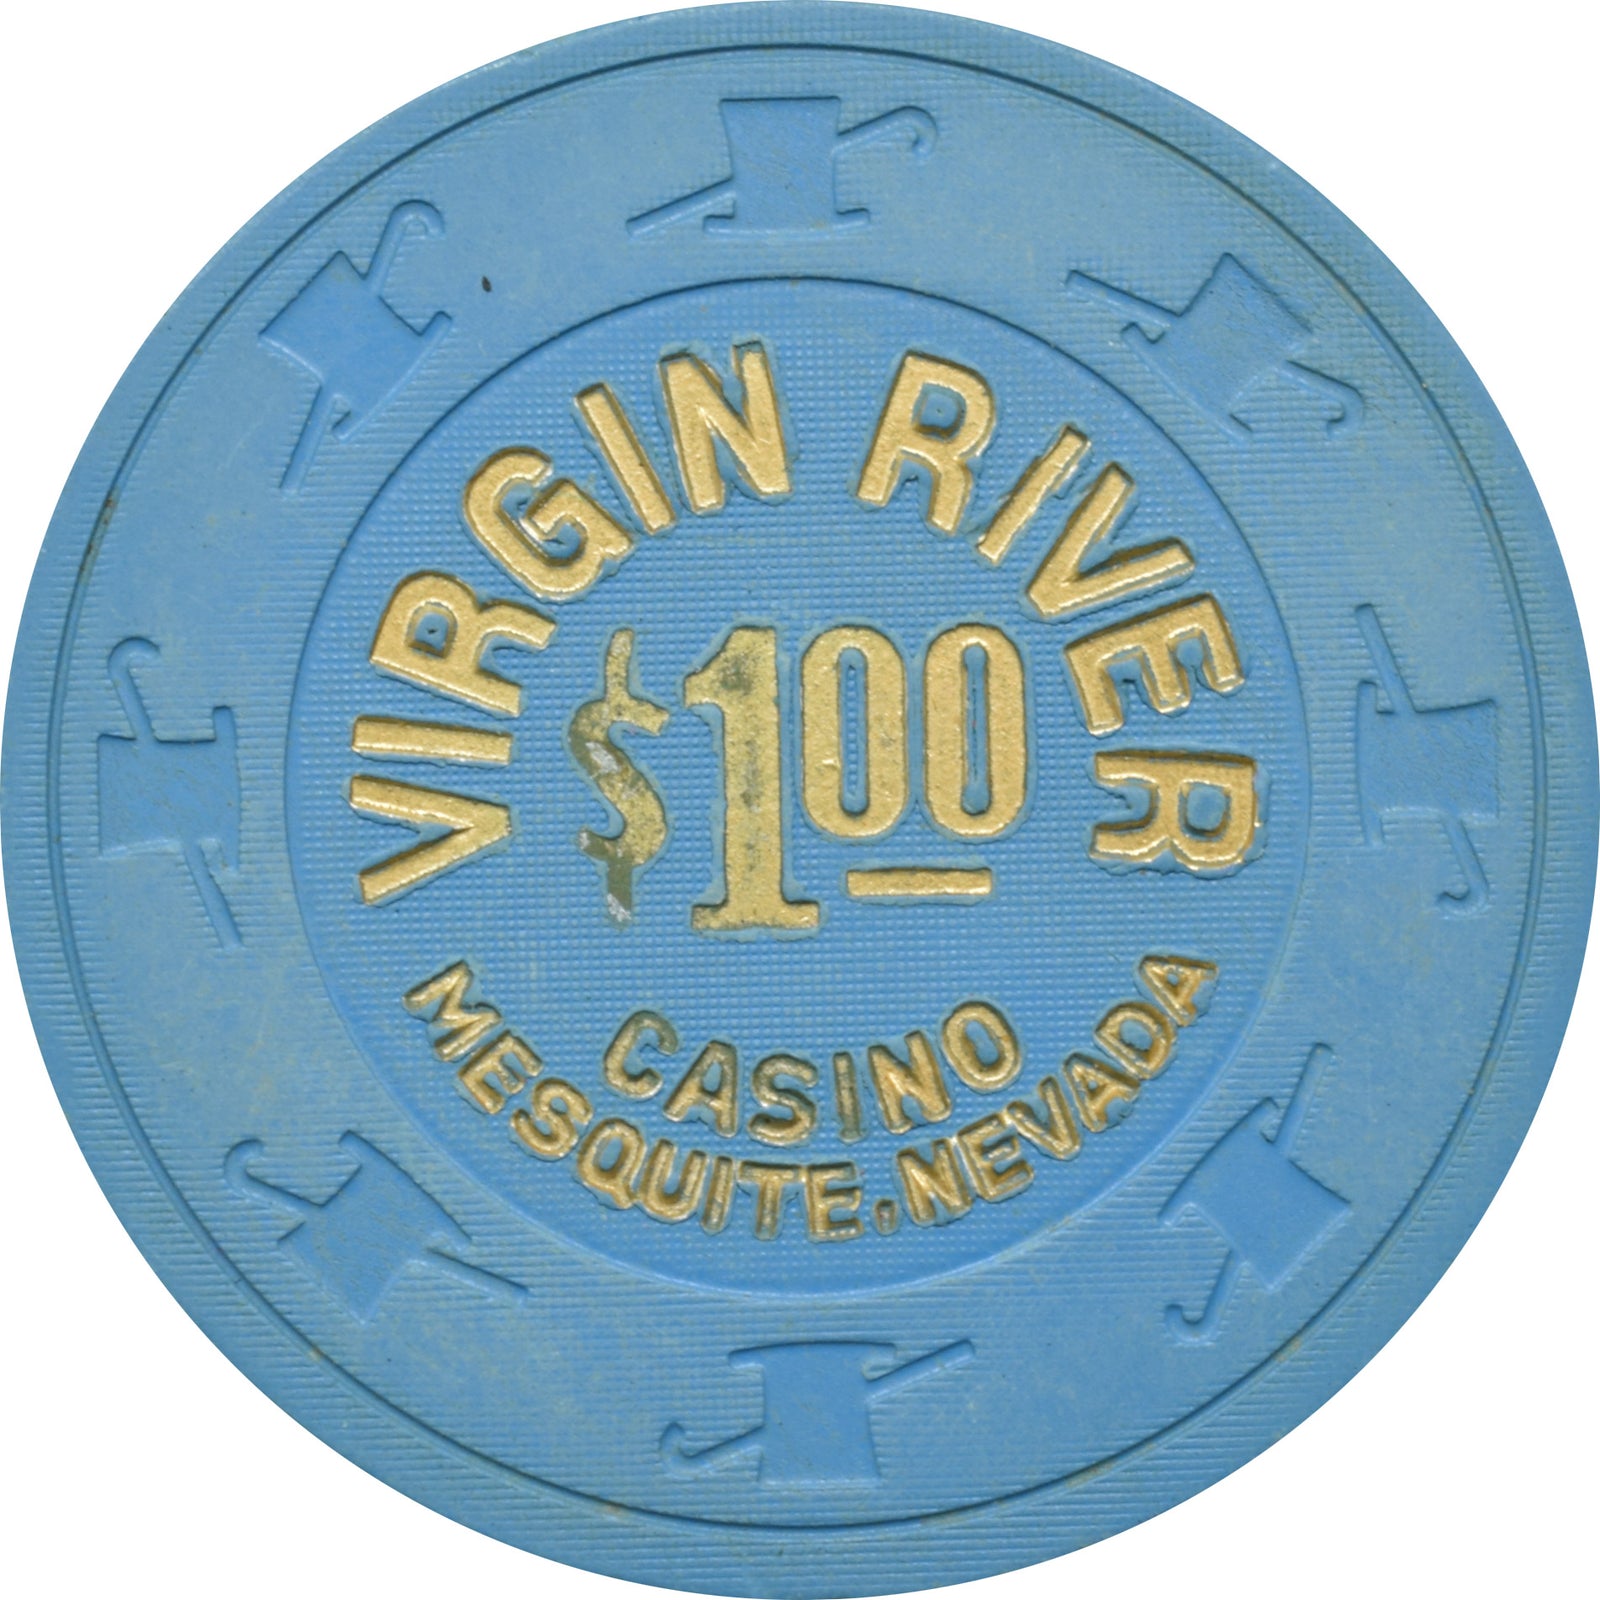 virgin river casino in mesquite